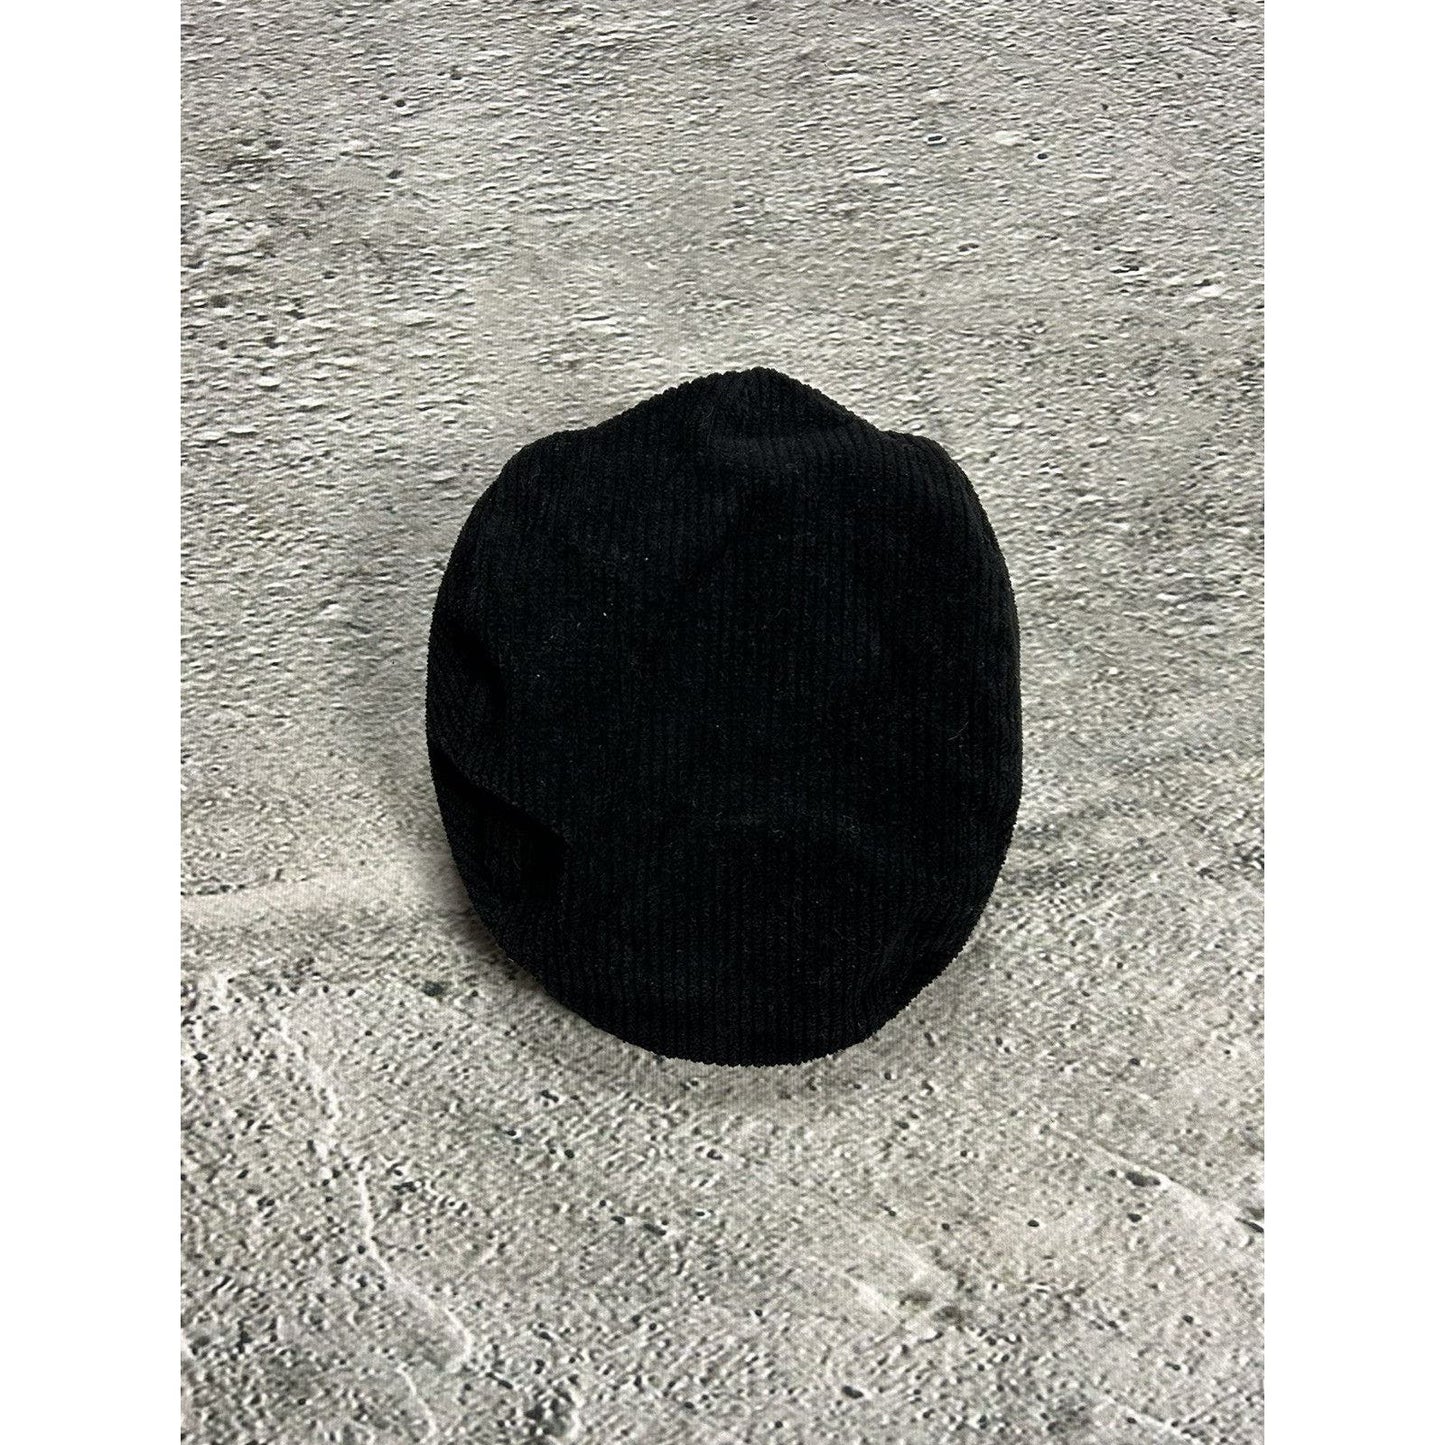 Kangol beret vintage black corduroy hat